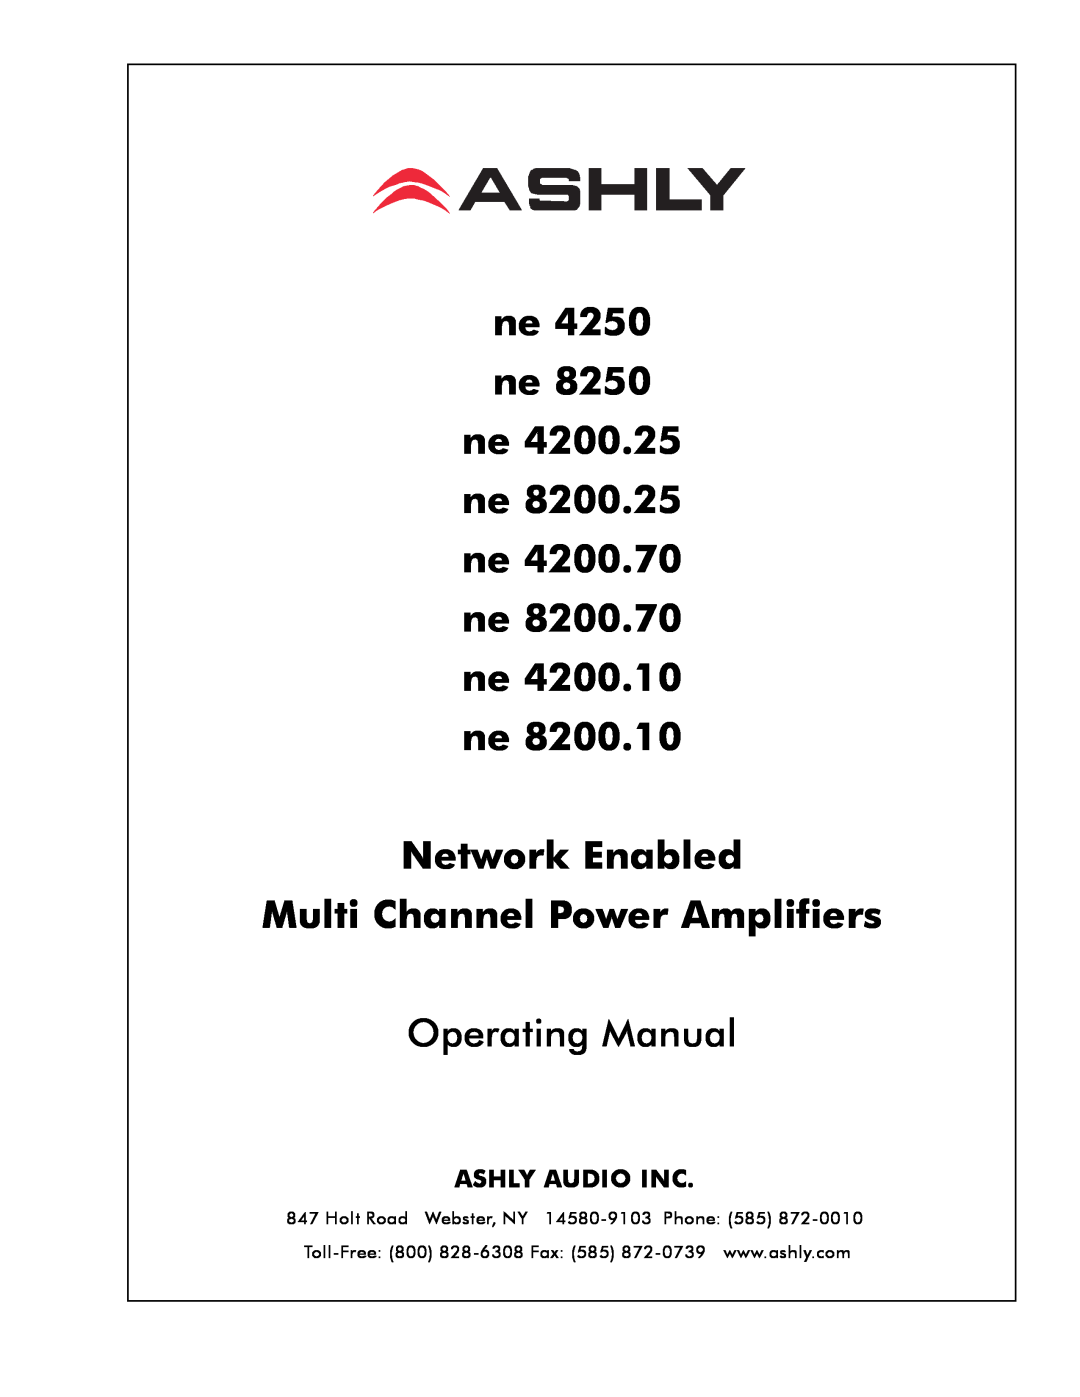 Ashly NE 4200.25 manual Network Enabled Multi Channel Power Amplifiers, Operating Manual, Ashly Audio Inc 